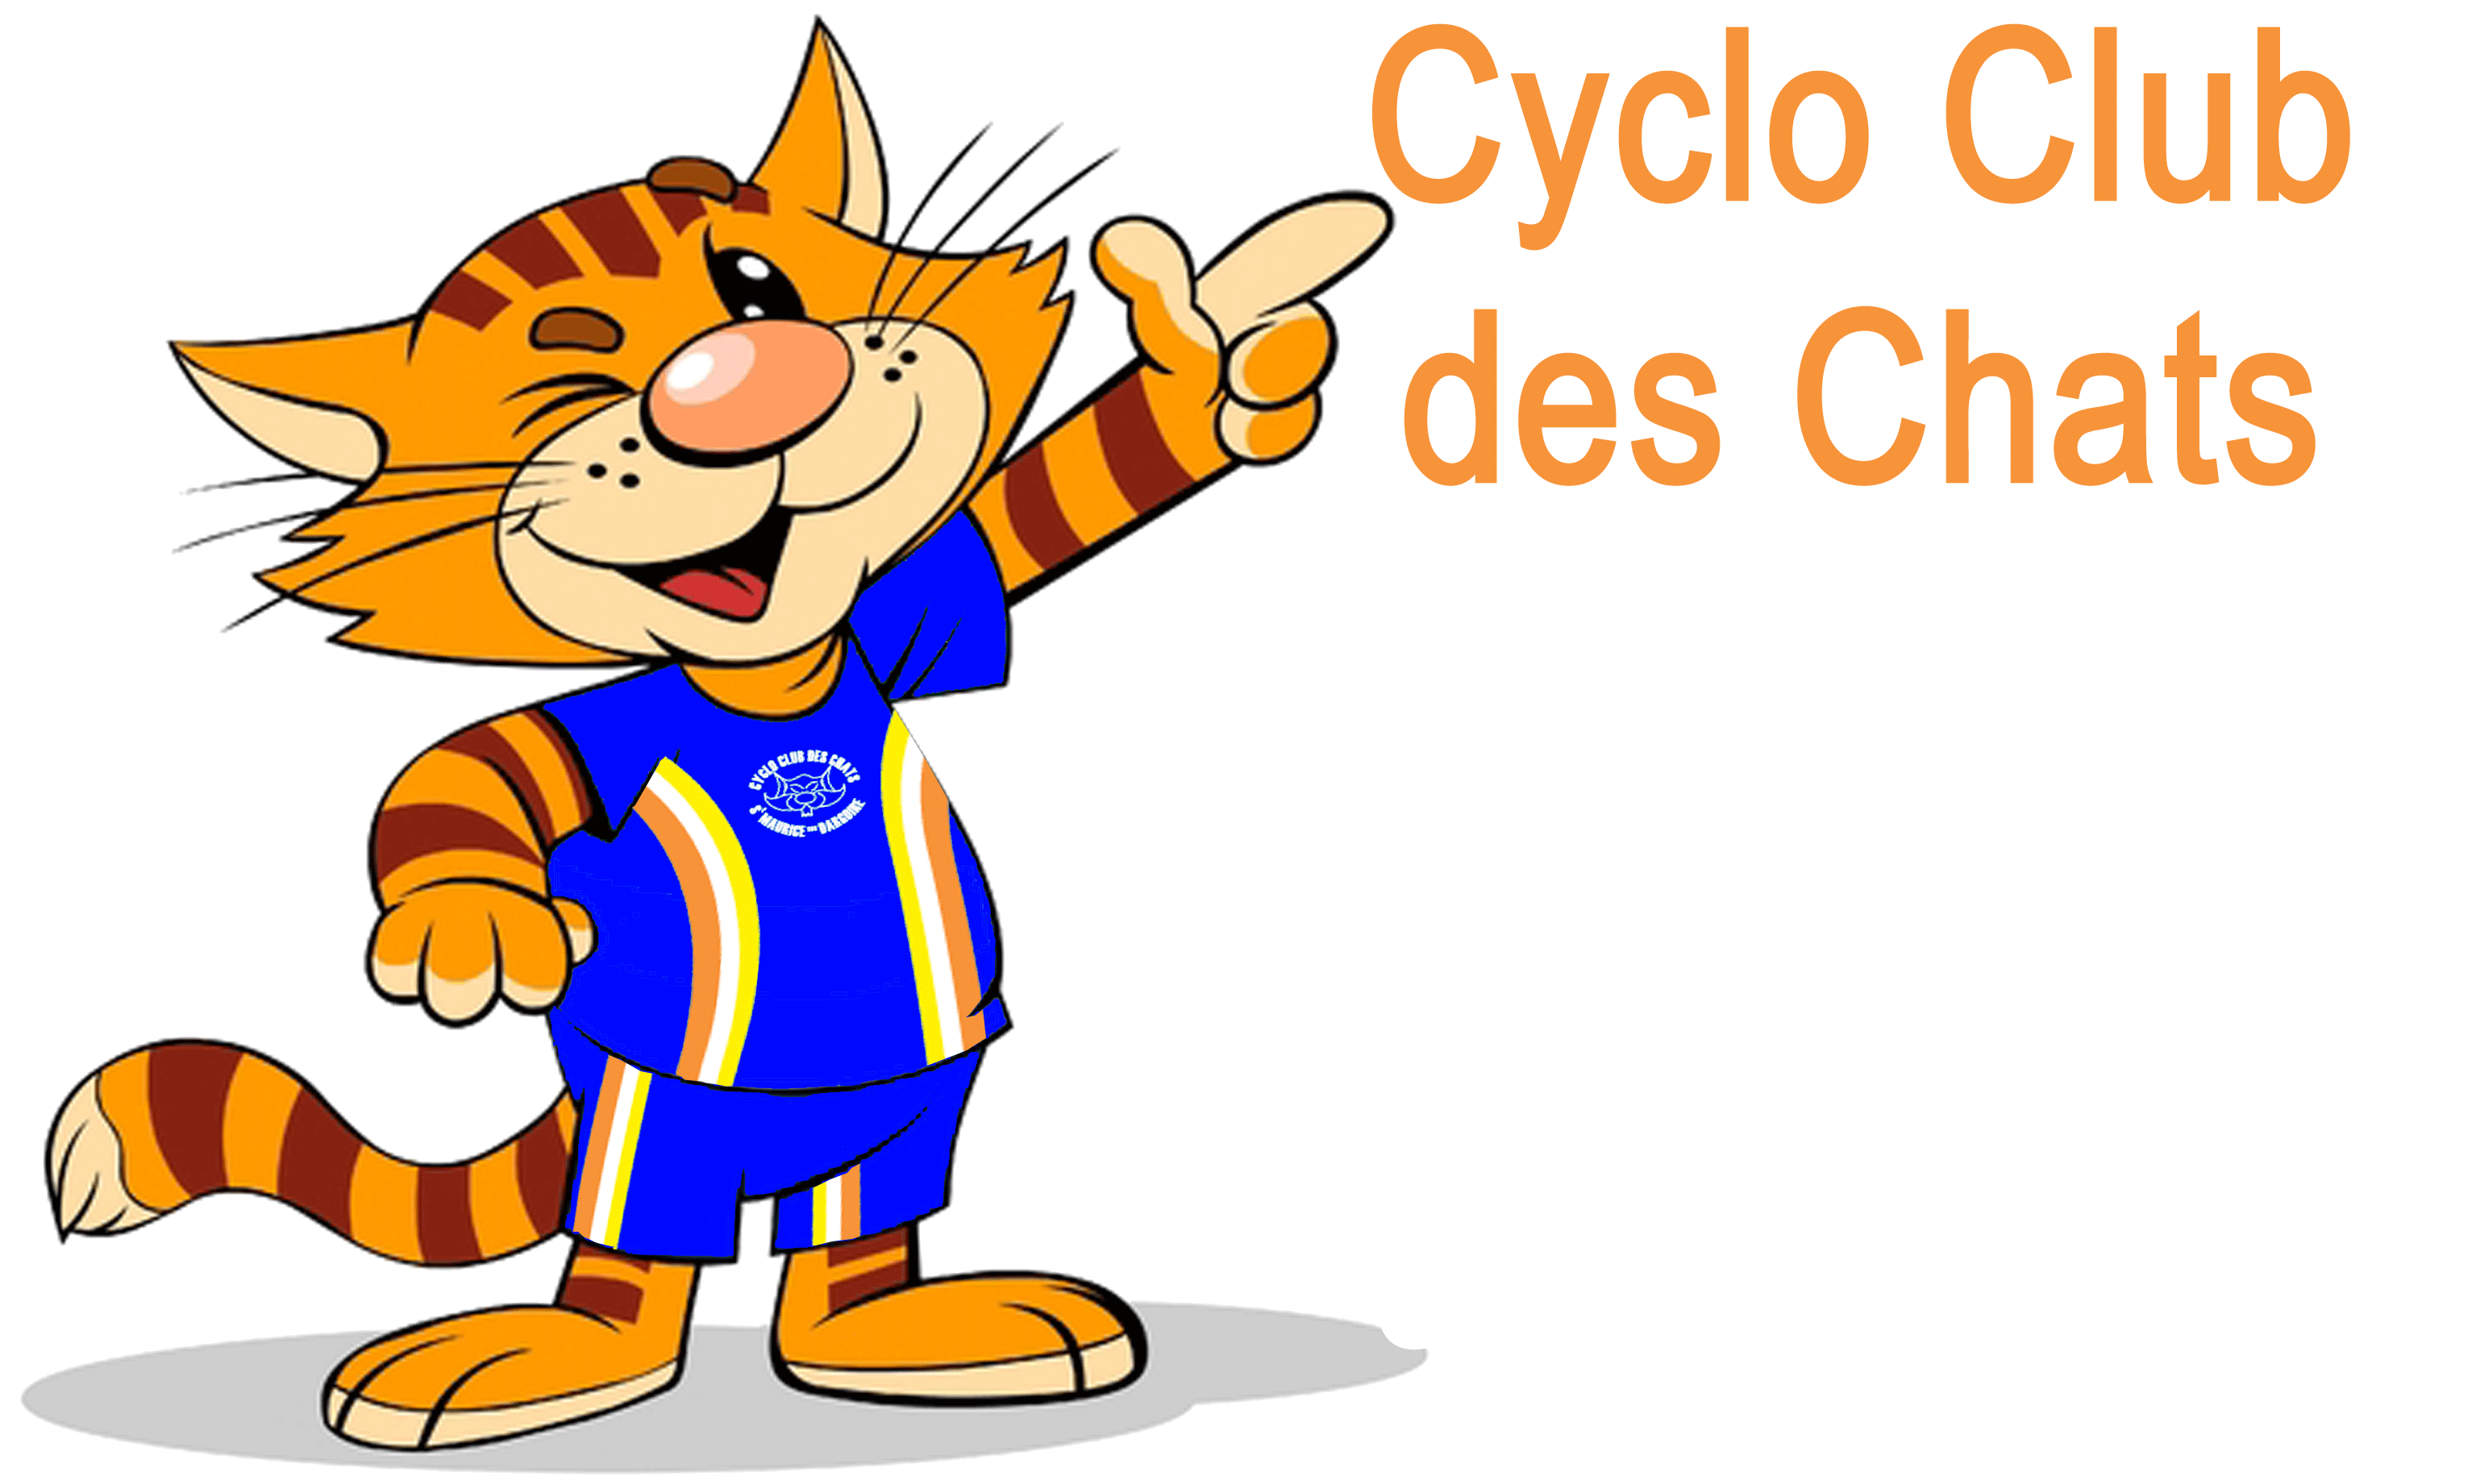 Cyclo Club des Chats